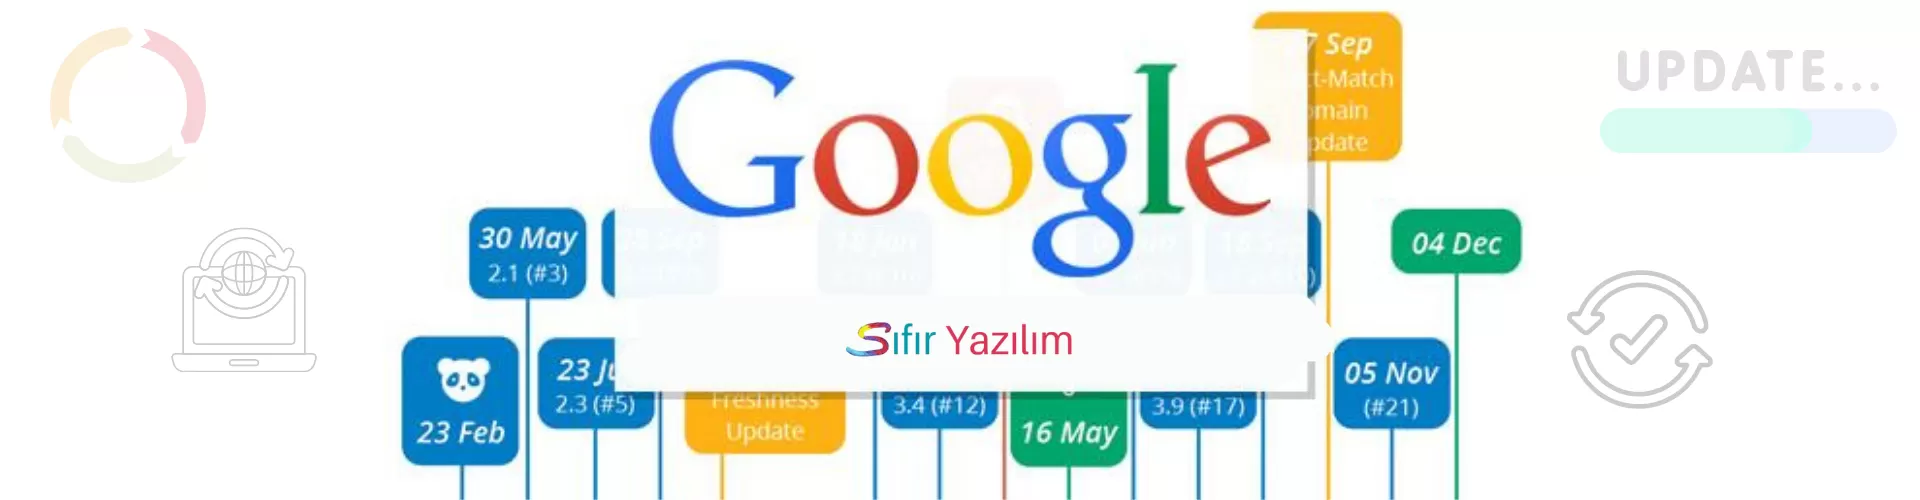 Google Algoritma Guncellemeleri Sifir Yazilim 1.png